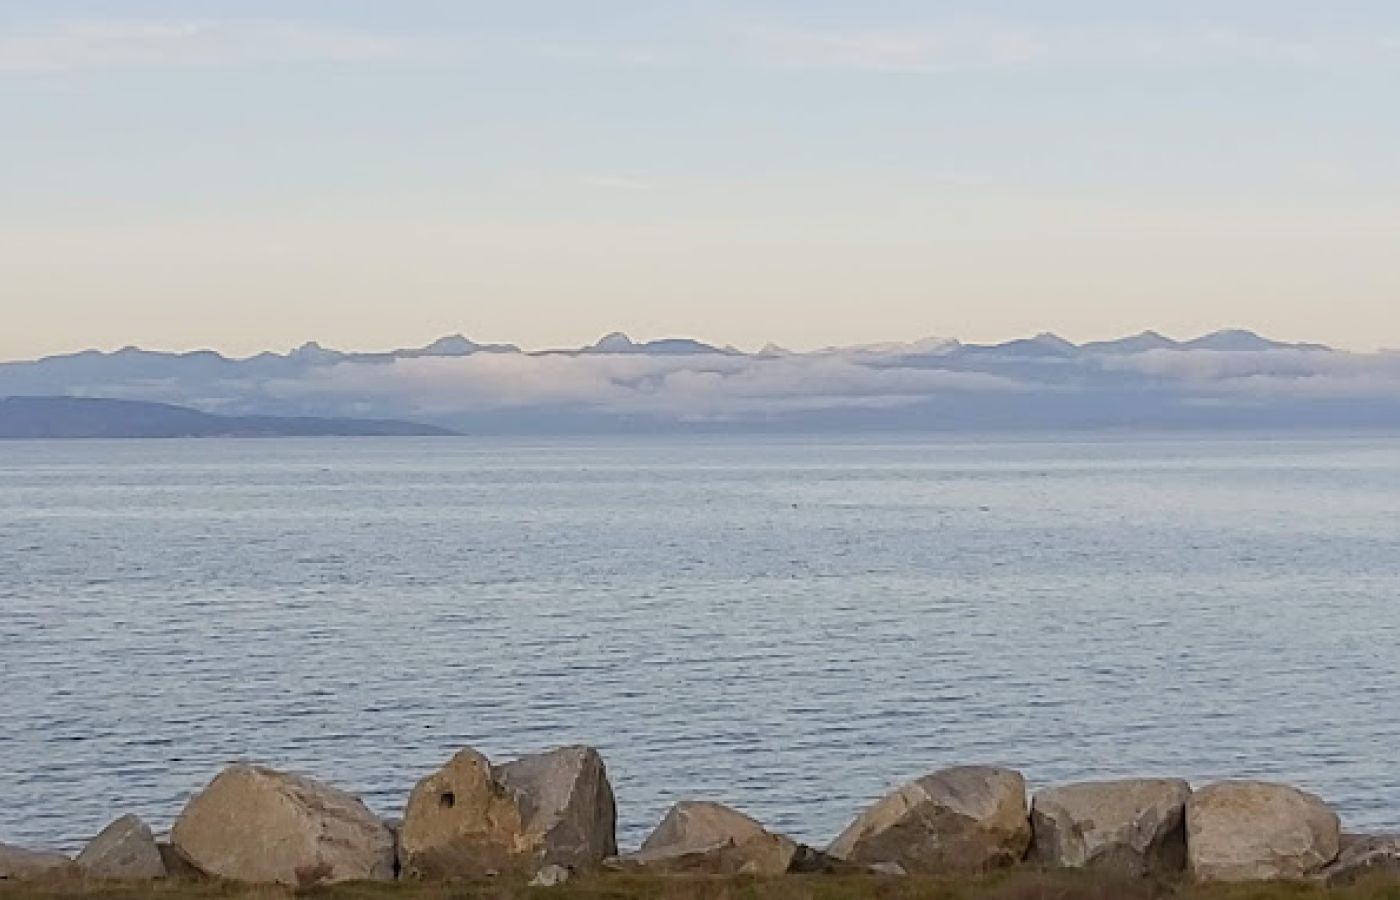 View of Georgia Strait from Surfside RV Resort in Parksville